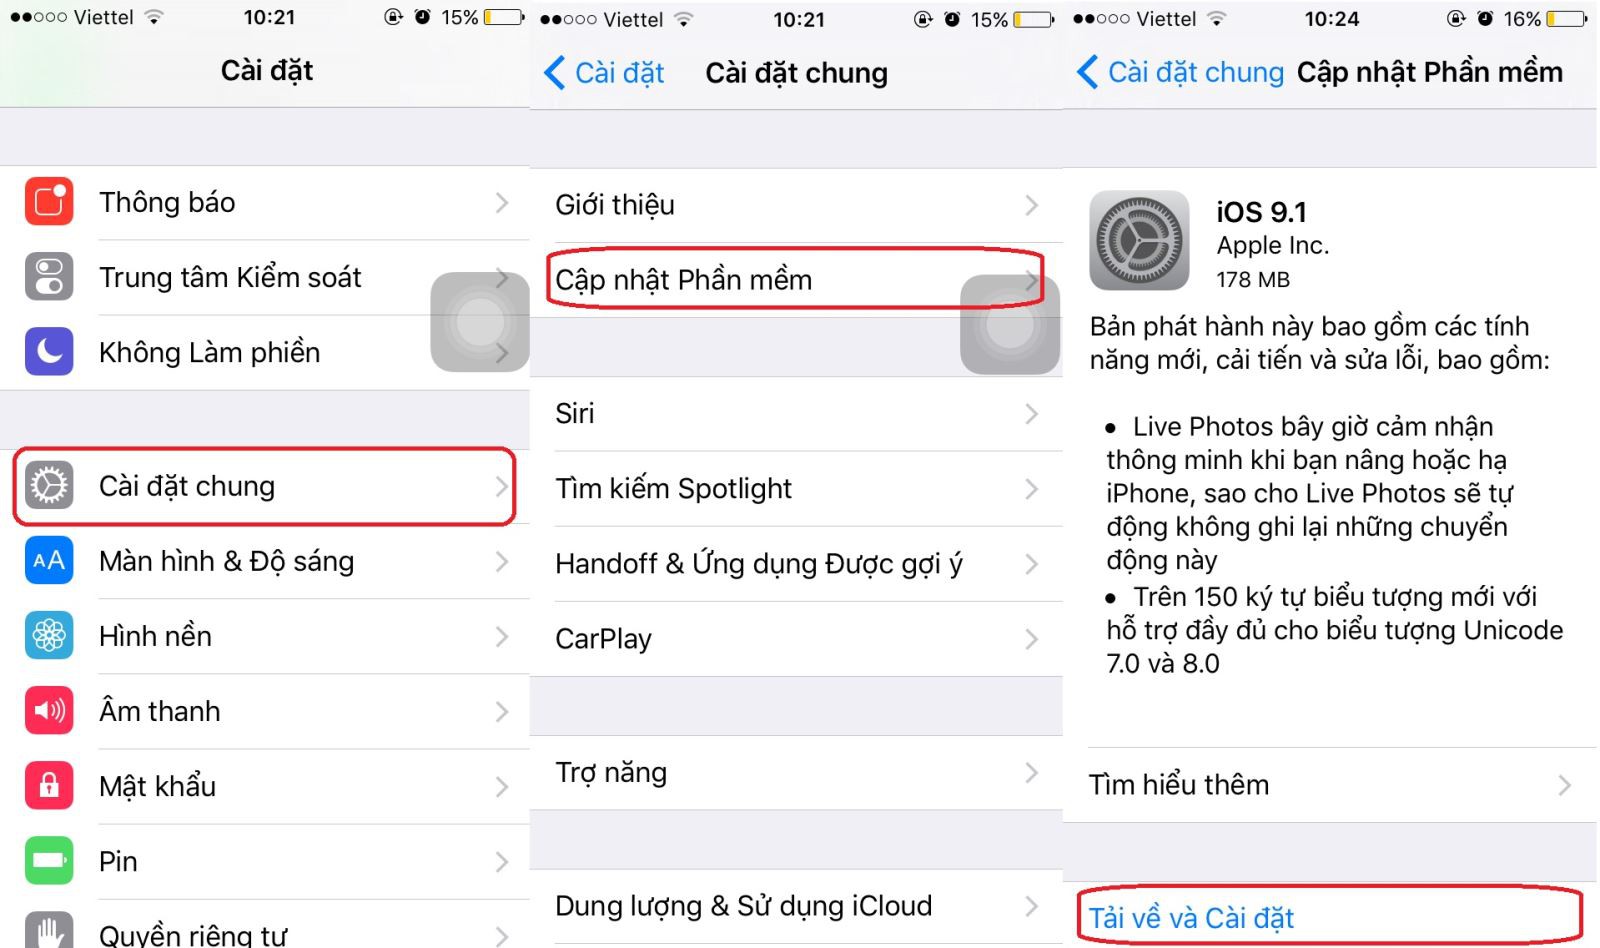 Cập nhật iOS 9.1 thông qua OTA